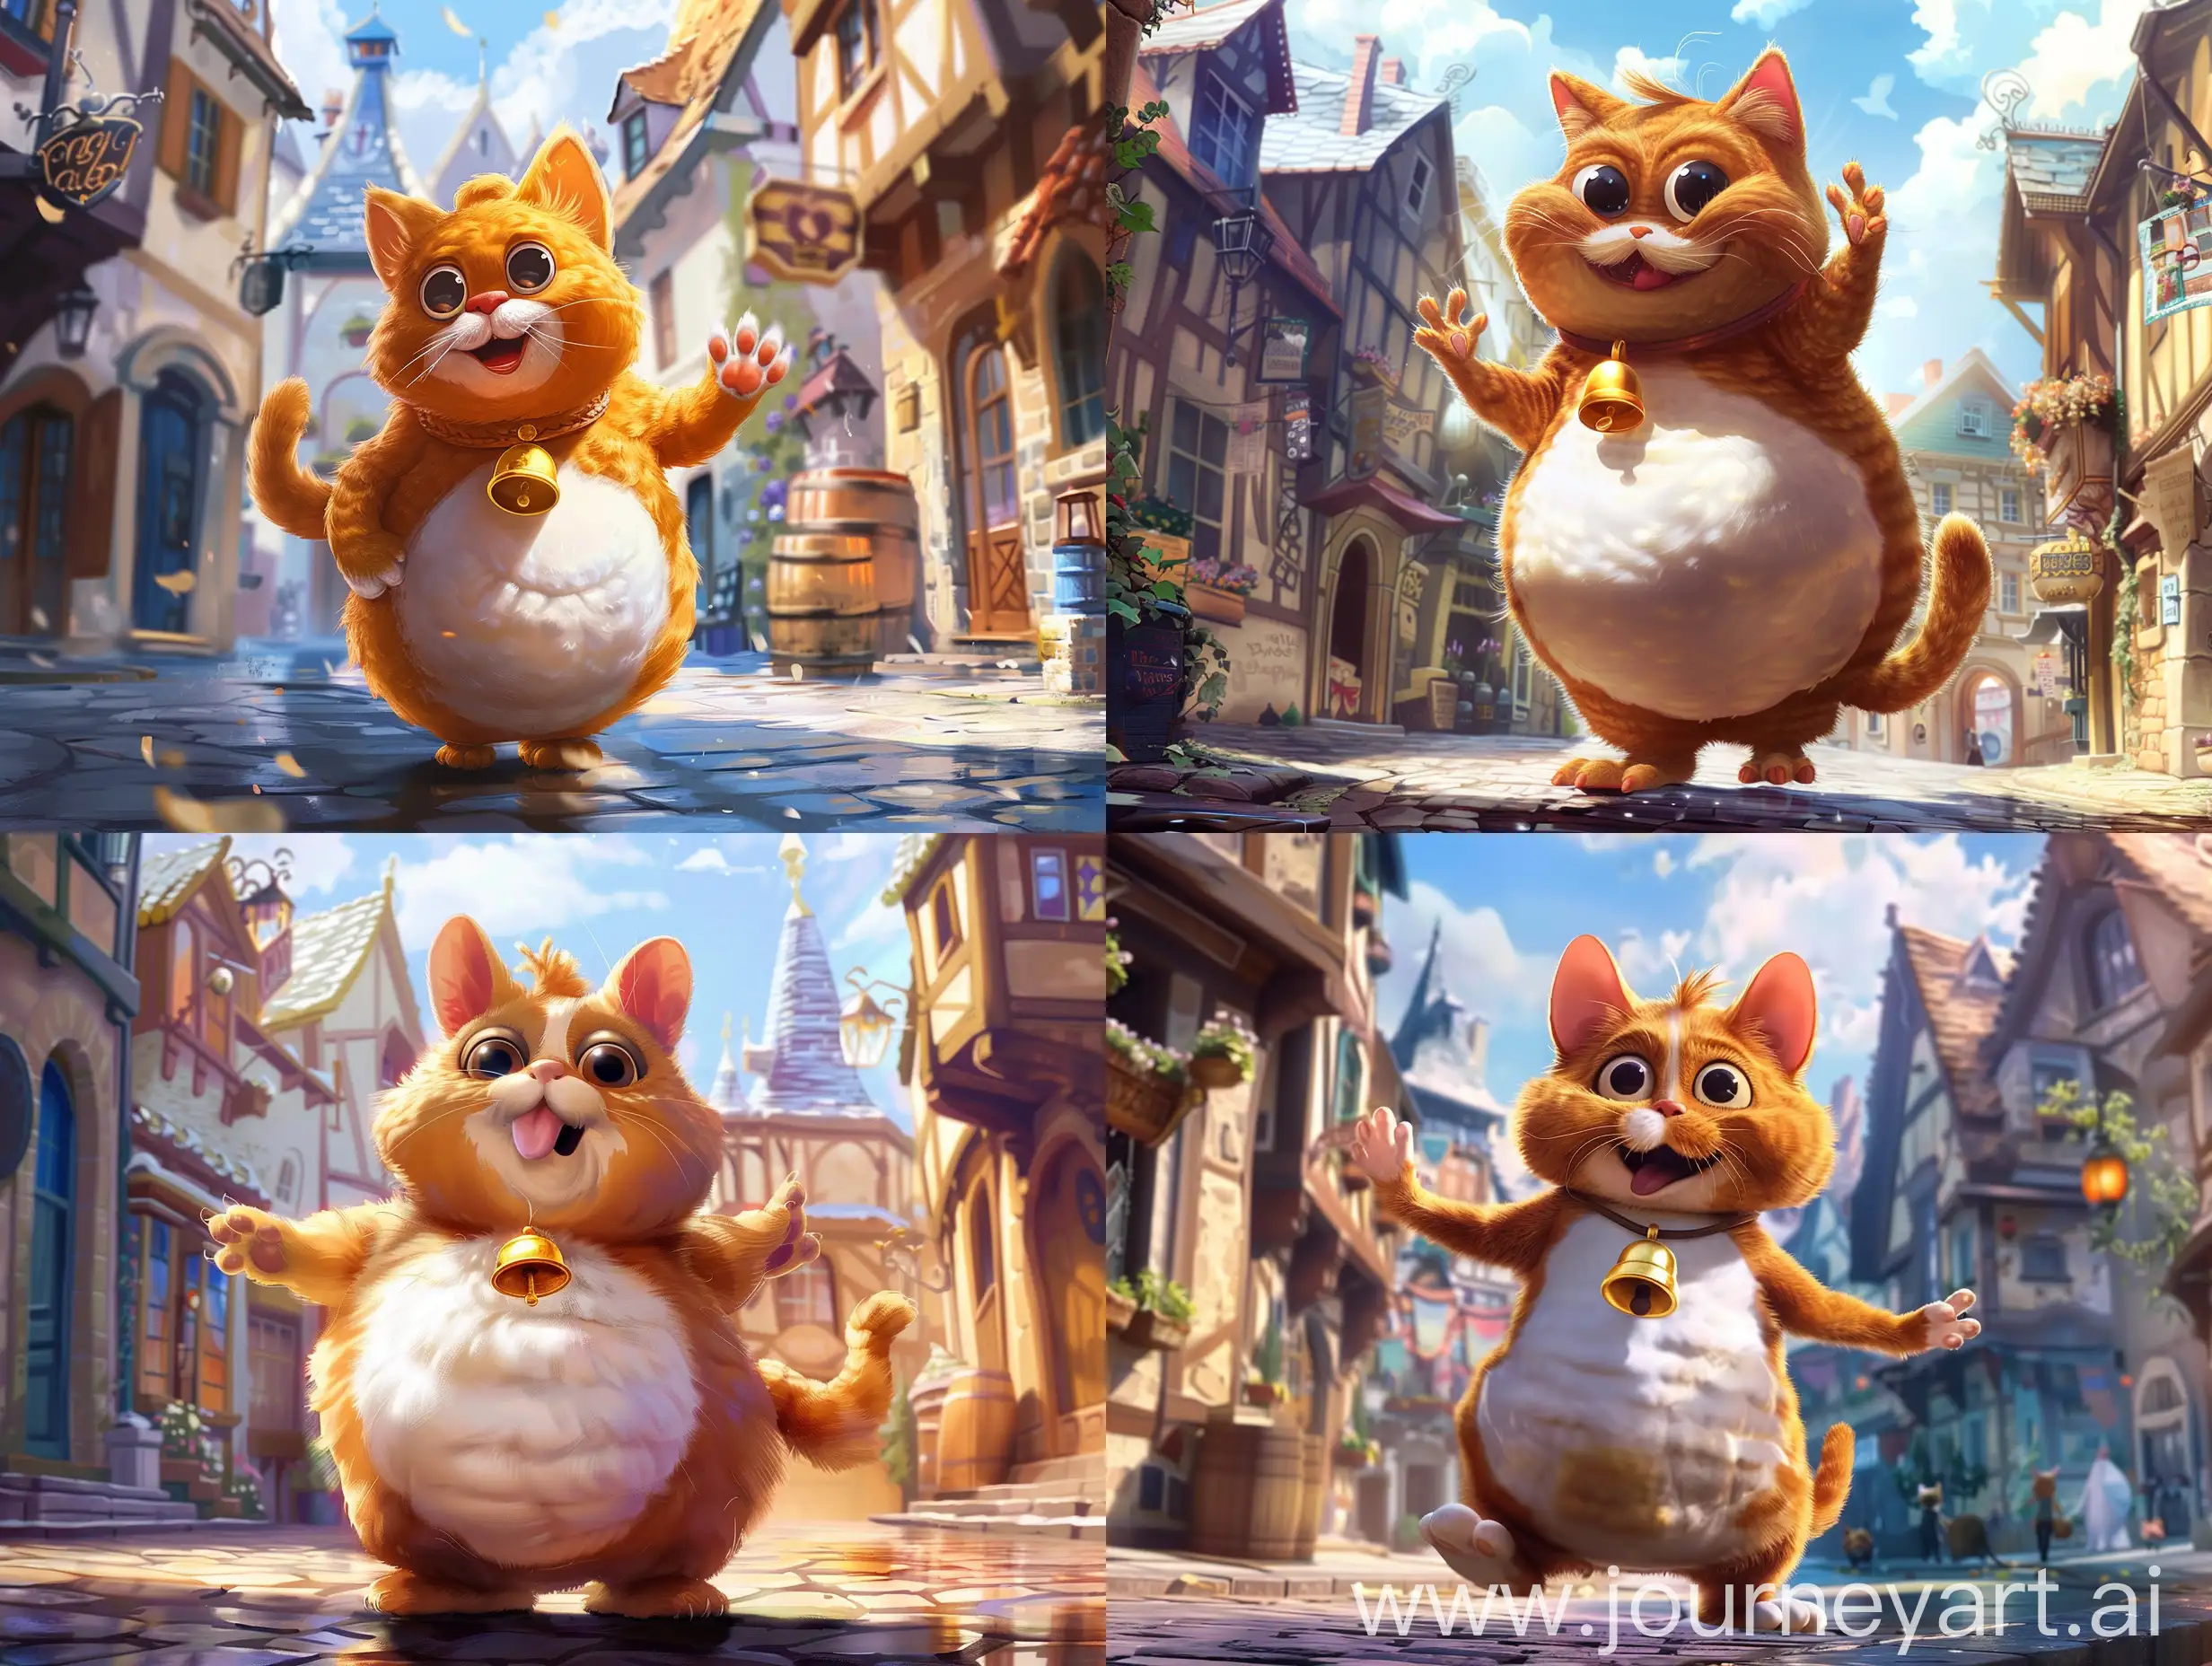 Adorable-Garfield-Cats-Walking-on-Fairy-Tale-Street